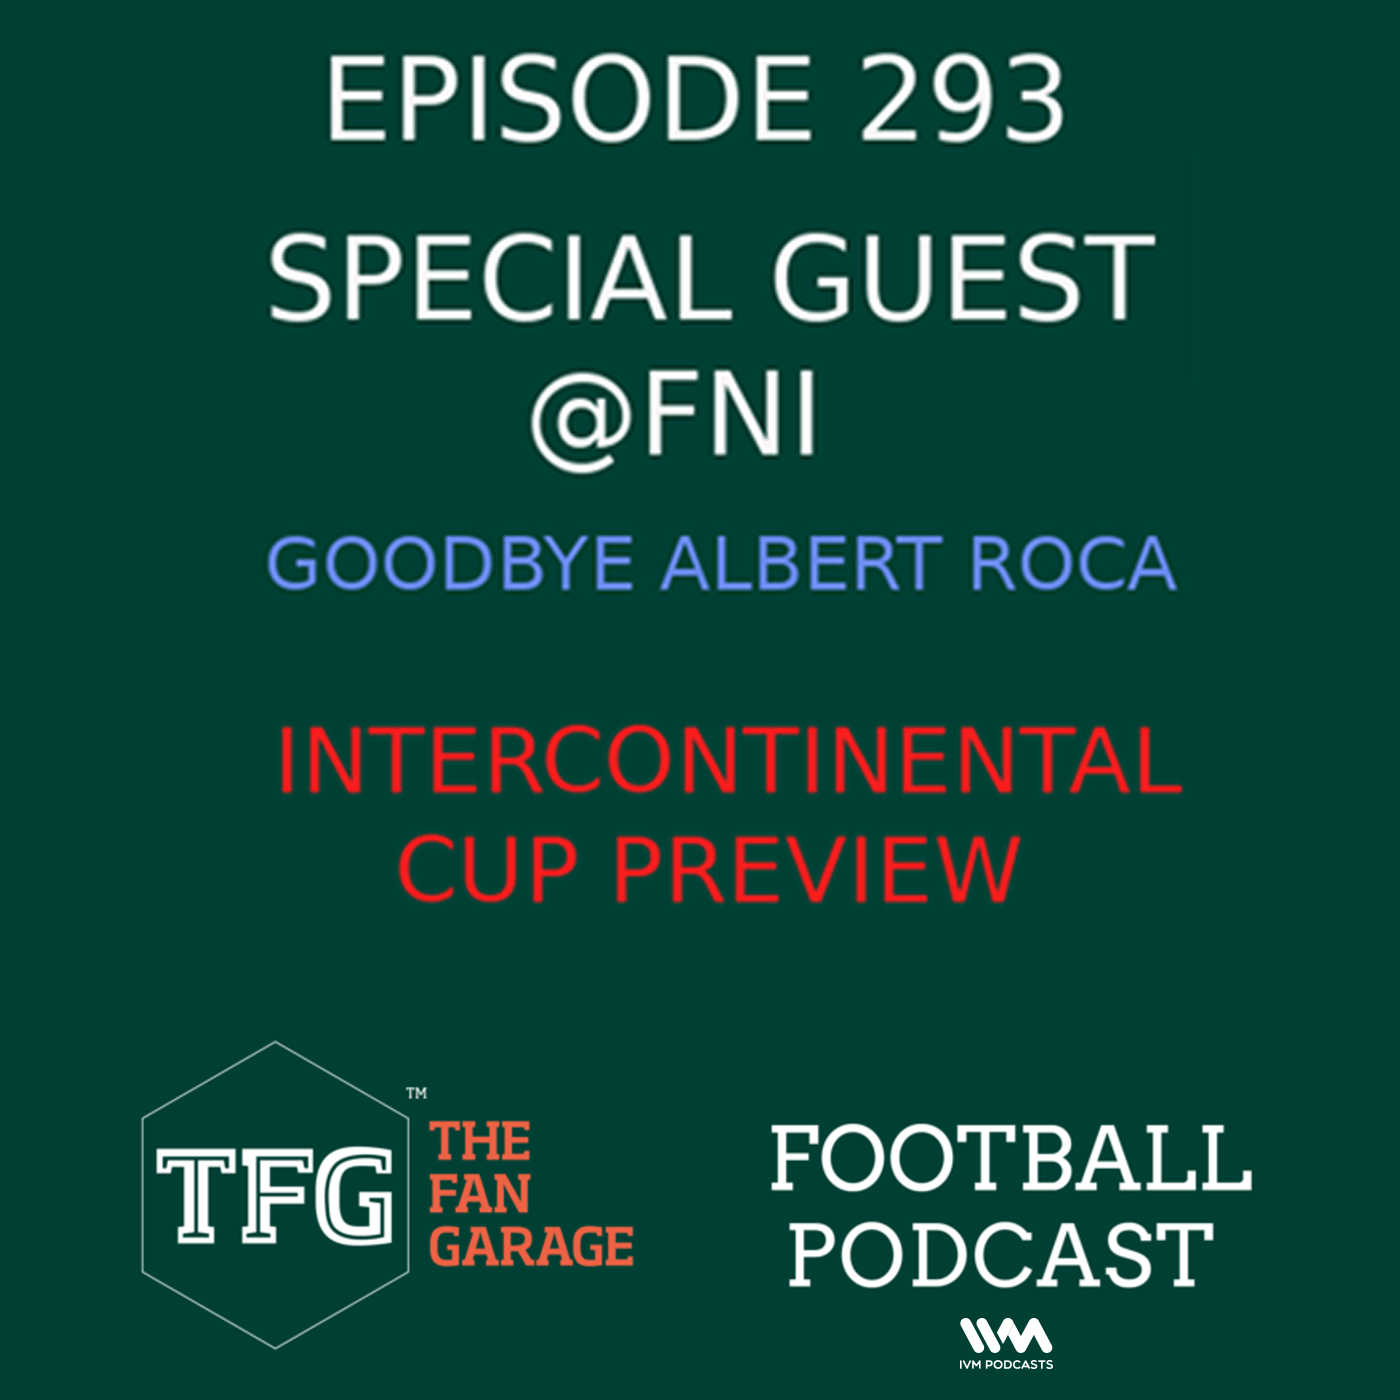 TFG Indian Football Ep. 293: Special Guest FNI - Albert Roca, Intercontinental Cup